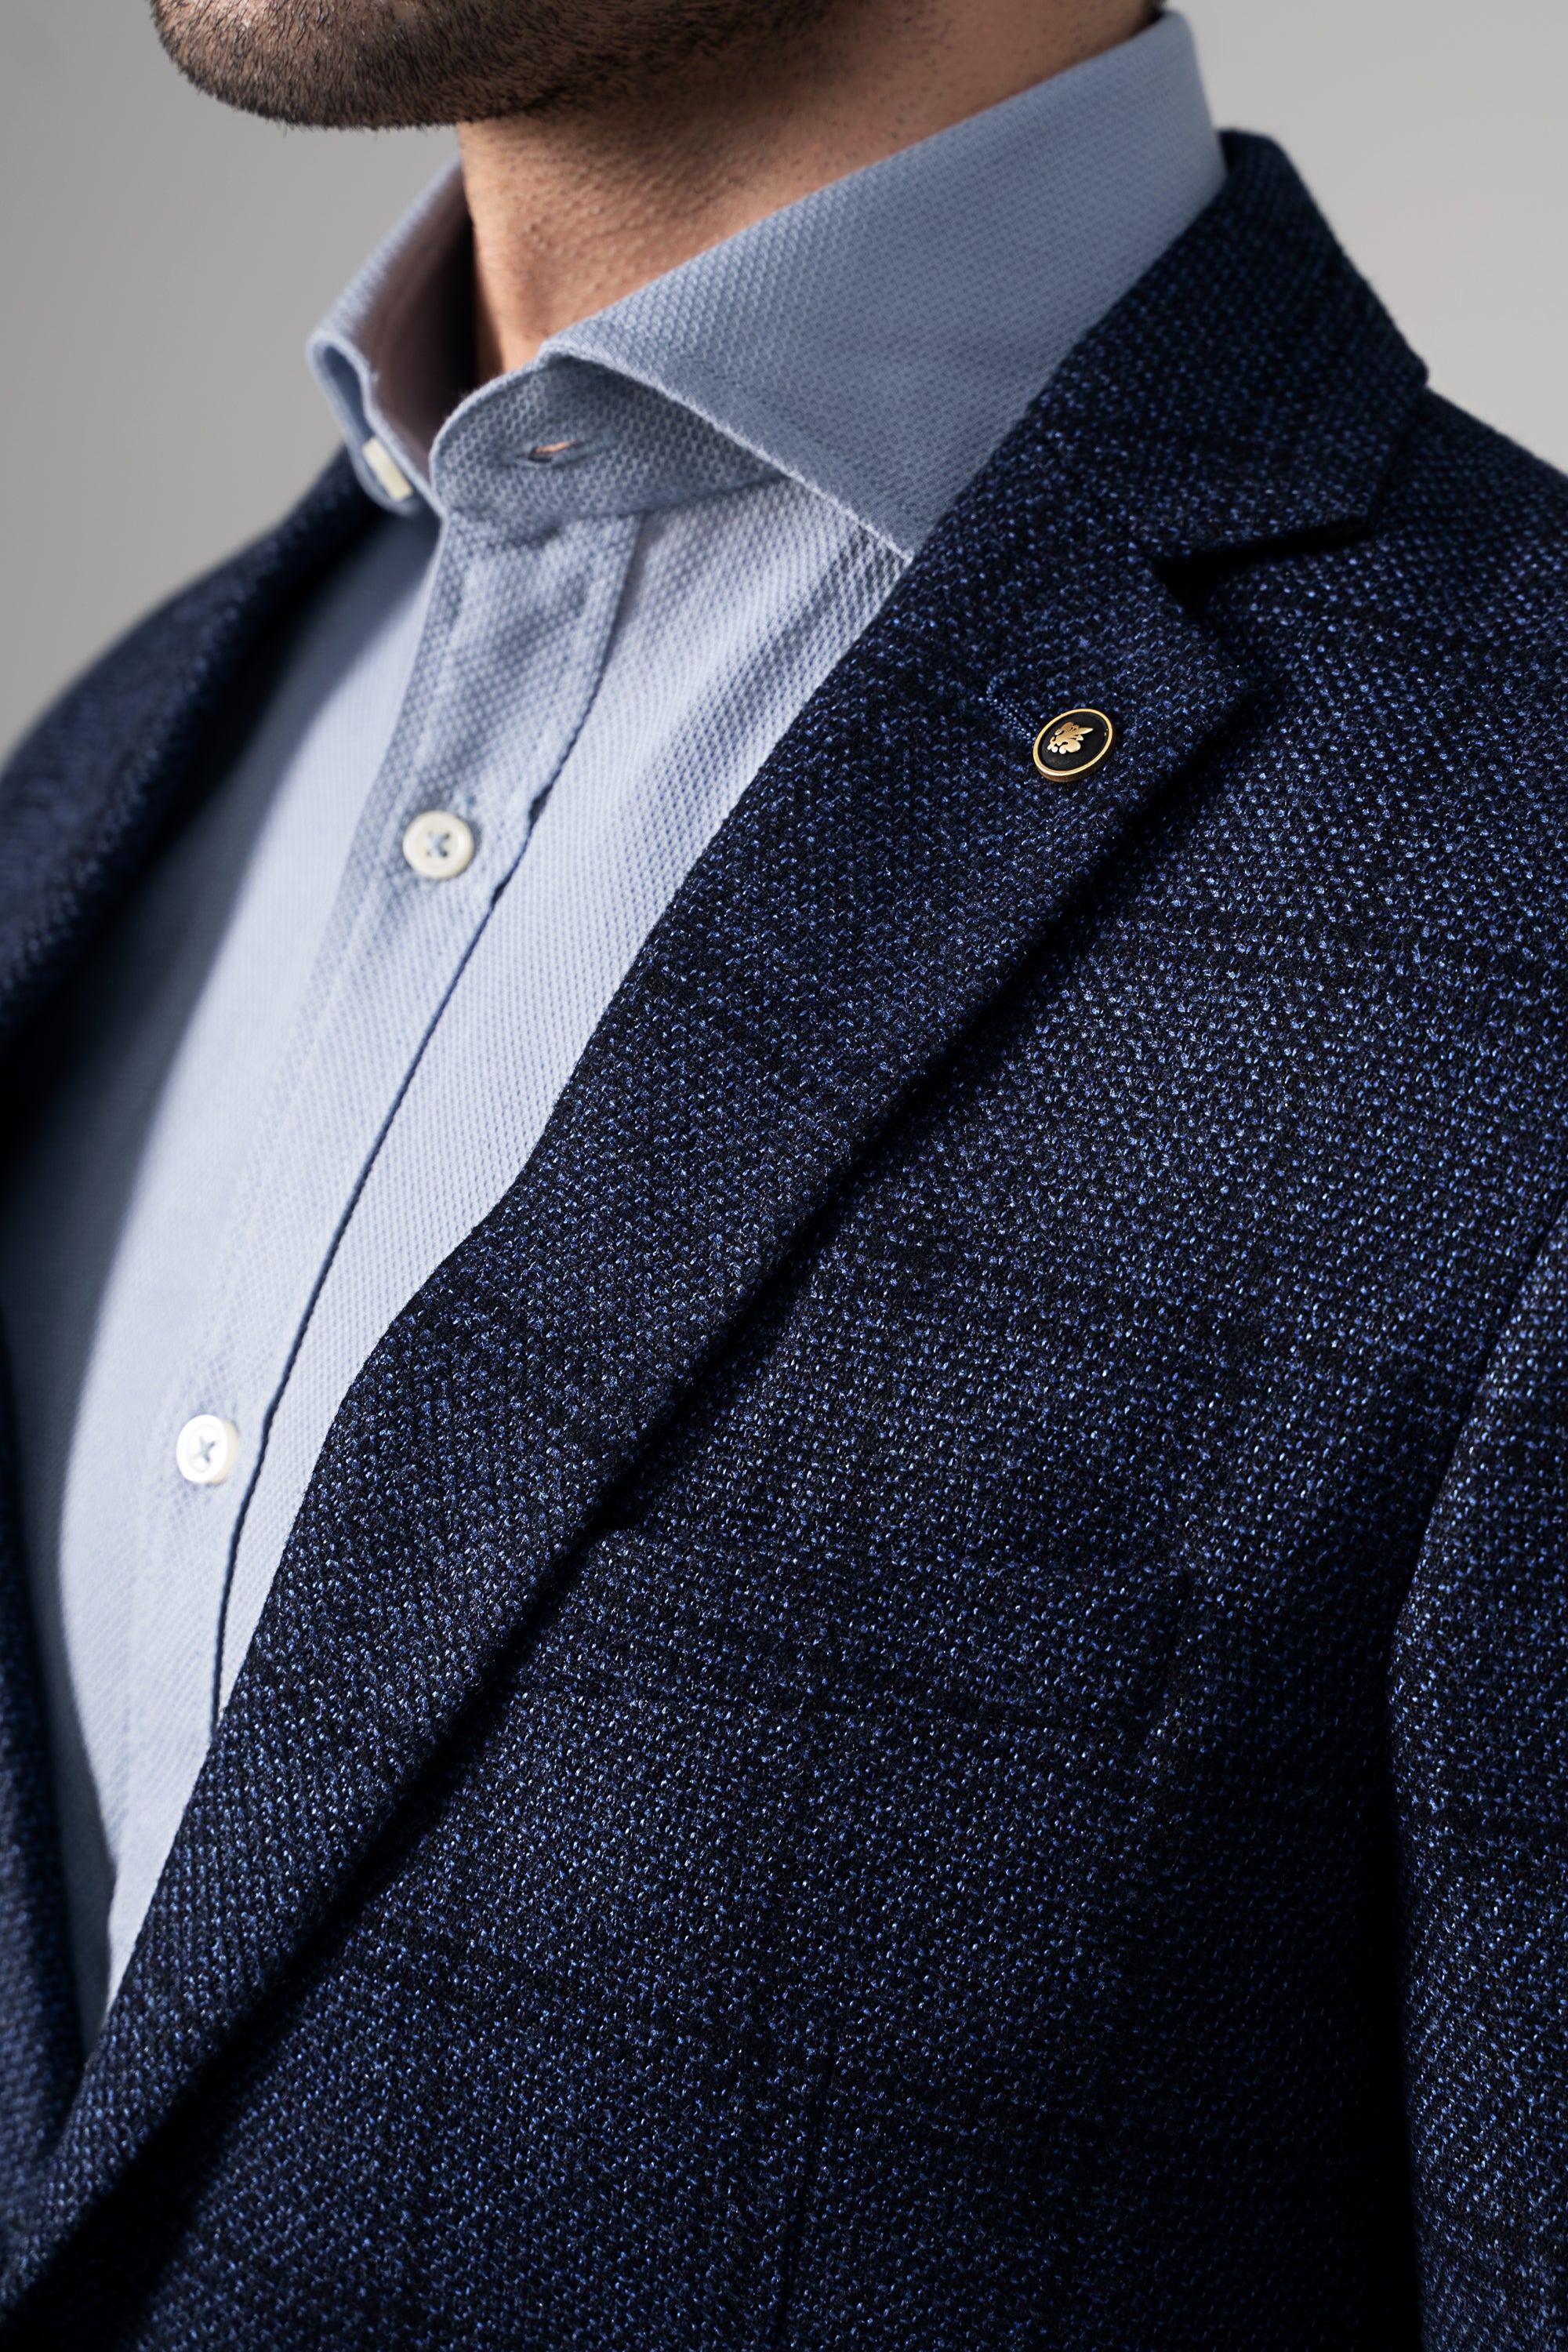 Classy Grey Blazer Outfit Ideas for Men